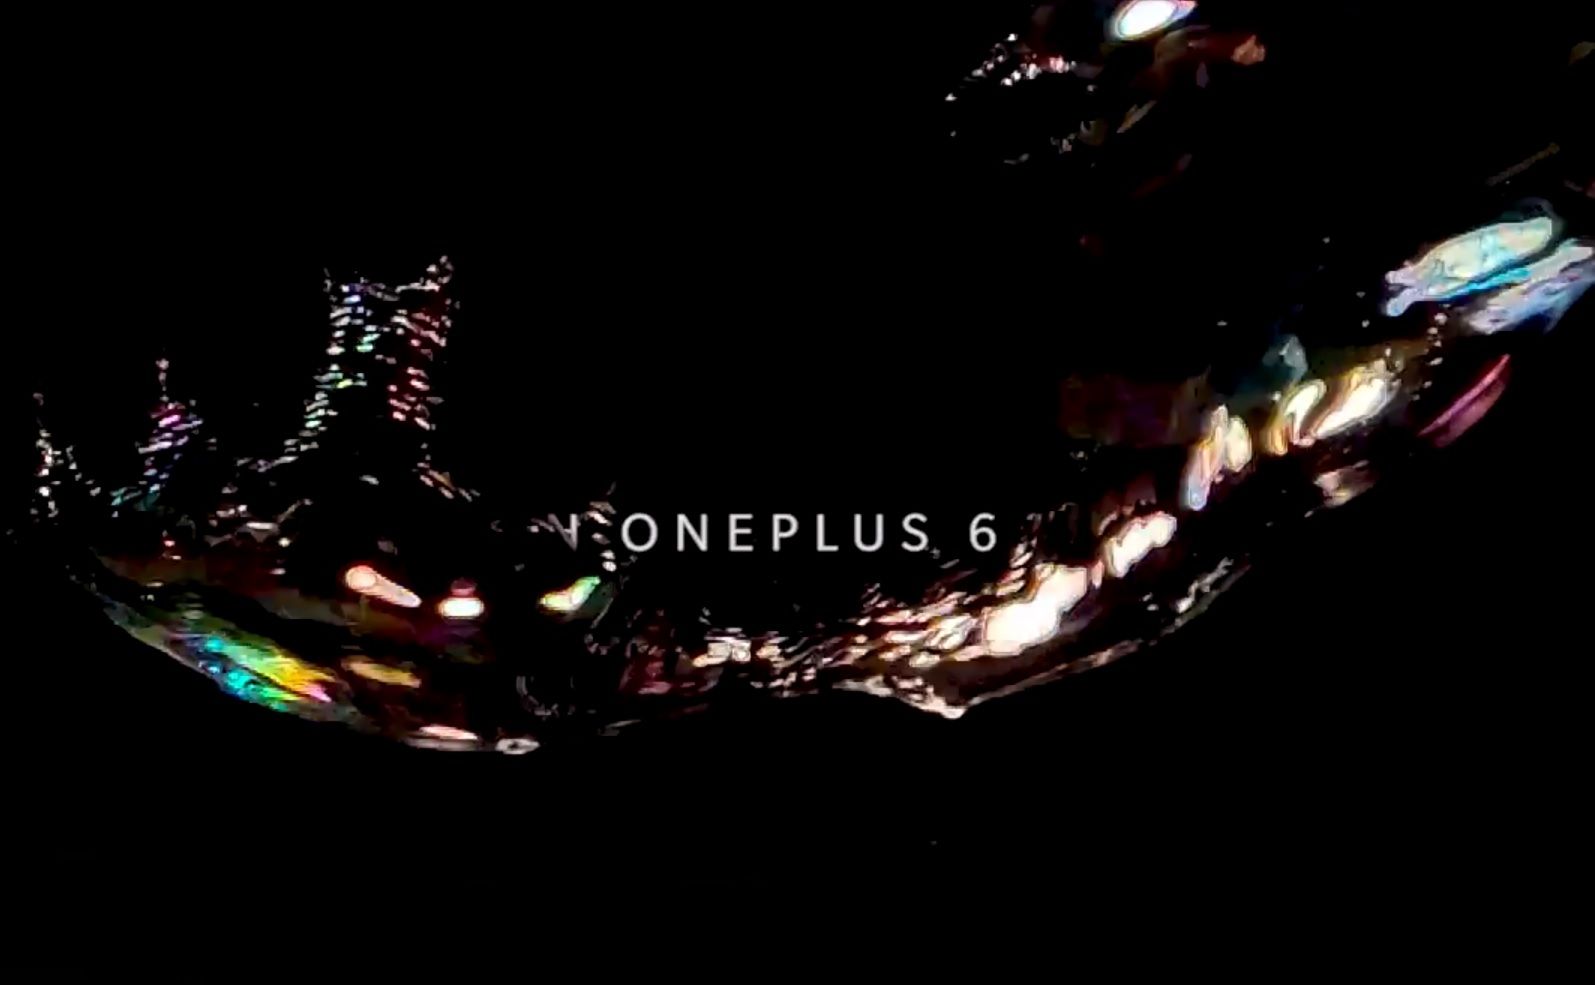 OnePlus โพสท์คลิปวิดีโอโชว์ฟีเจอร์ Super slo-mo ที่ถ่ายด้วย OnePlus 6 ใน Twitter